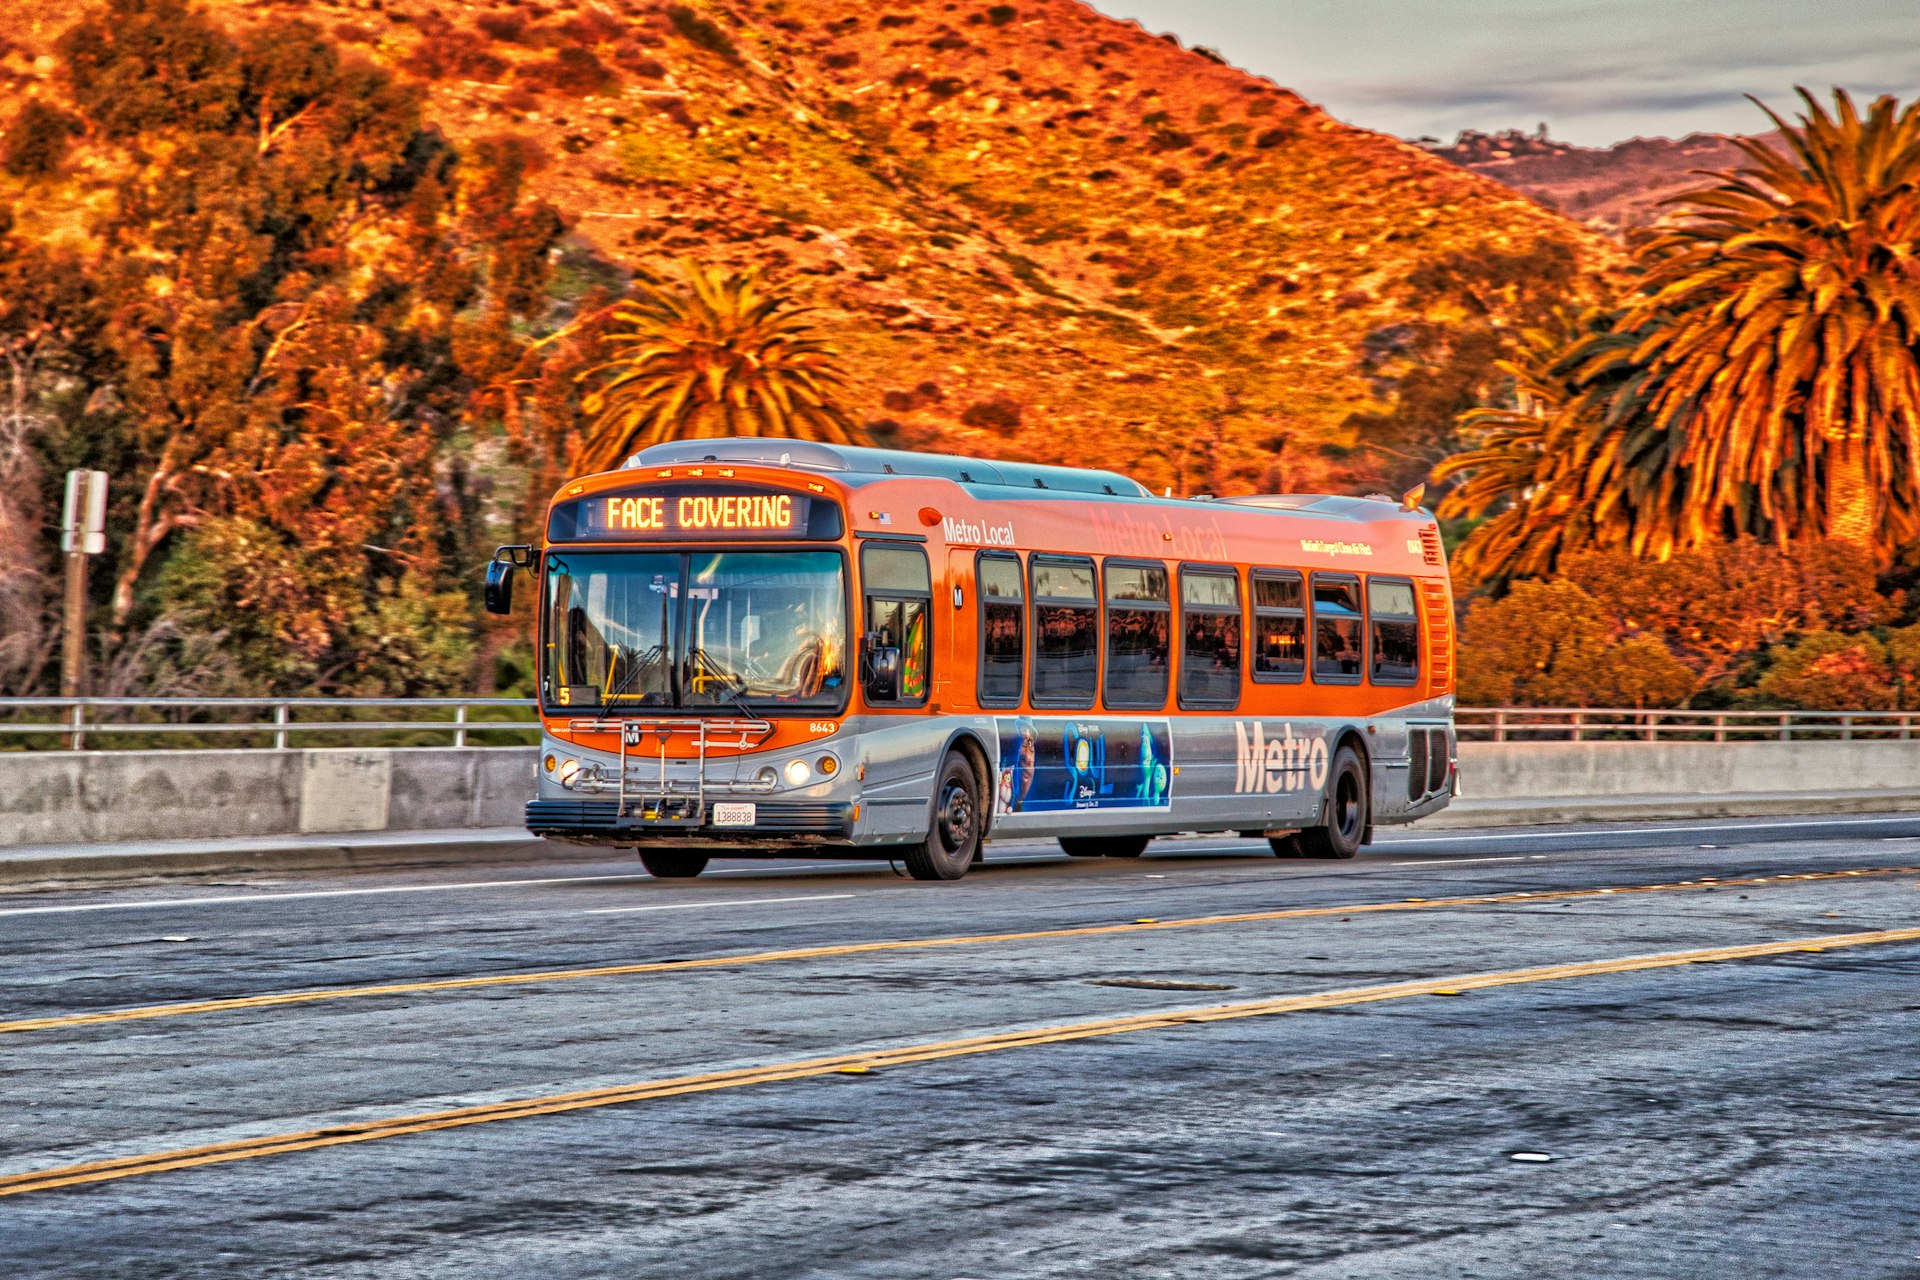 Los Angeles Metro Line 534 bus on the road